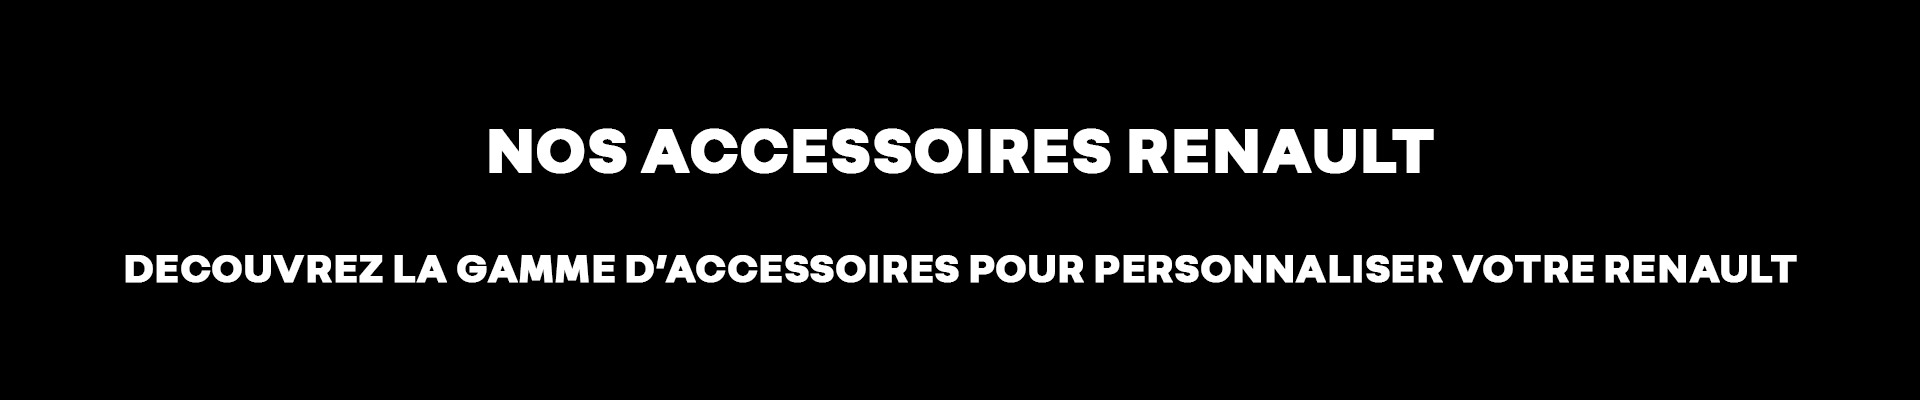 Accessoires Renault Saint-Germain-en-Laye